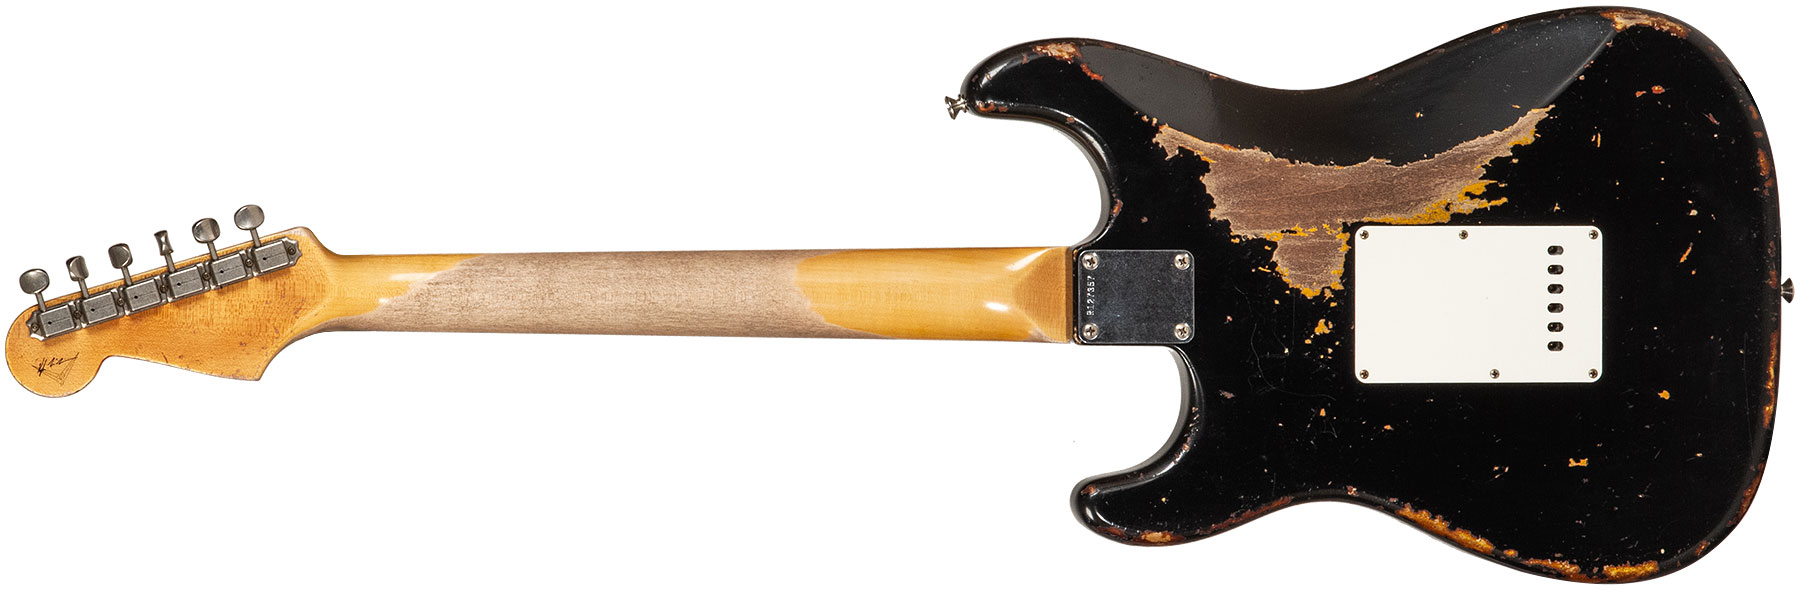 Fender Custom Shop Strat 1963 Masterbuilt K.mcmillin 3s Trem Rw #r127357 - Heavy Relic Black Ov. 3-color Sunburst - Guitare Électrique Forme Str - Var